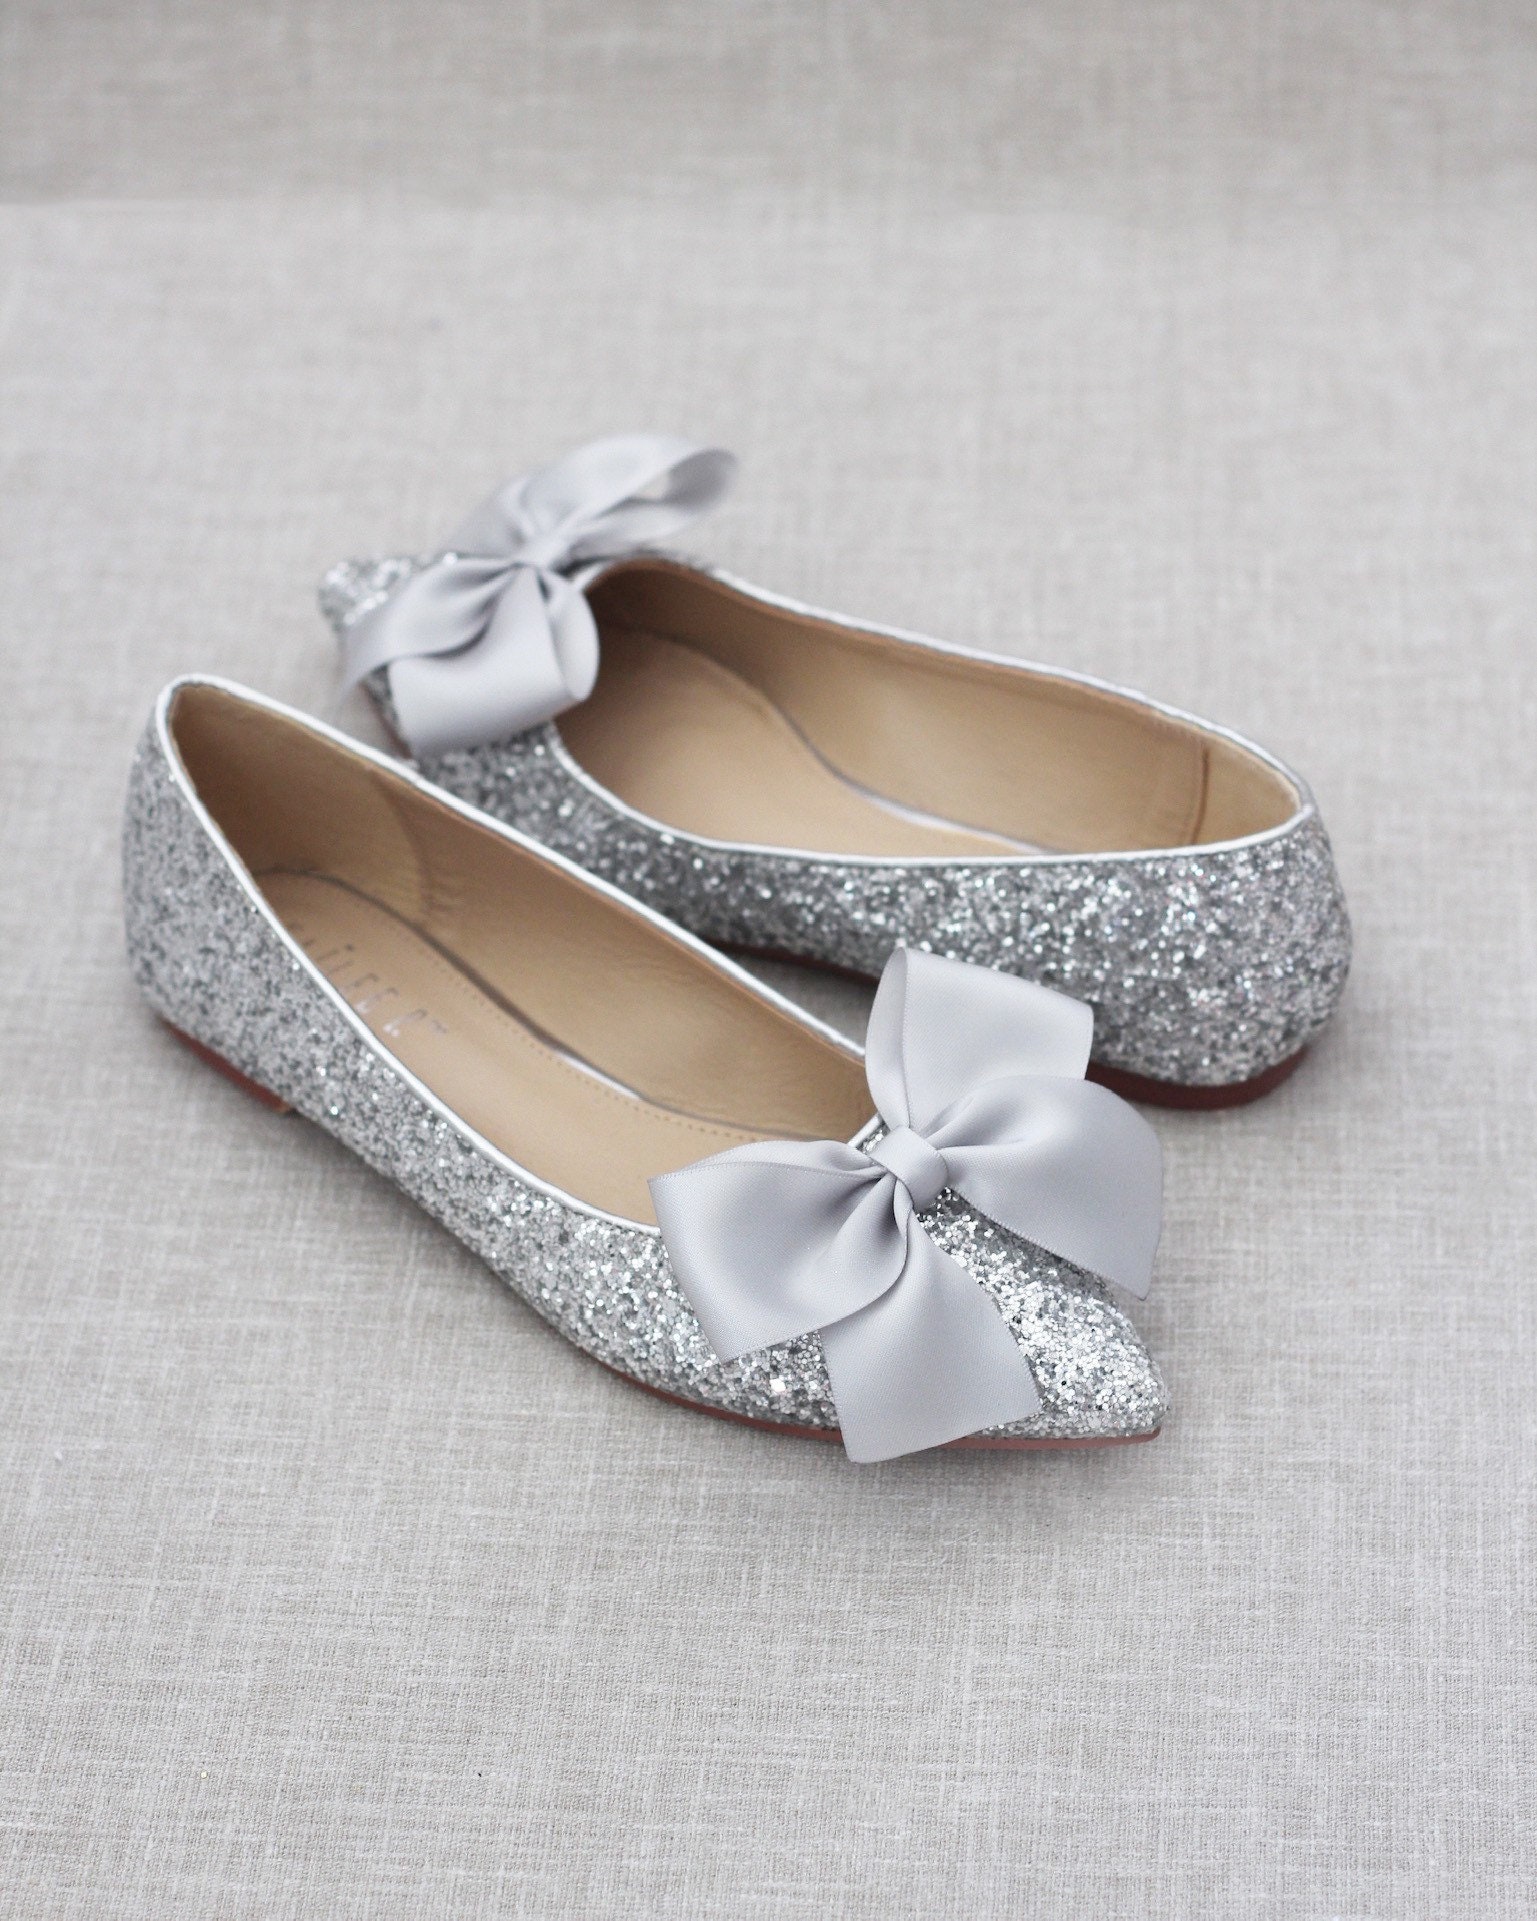 Fullwill Women Sparkly Bridal Ballet Flats Rhinestone Pointed Toe Slip On Wedding Ballerina Shoes Sliver